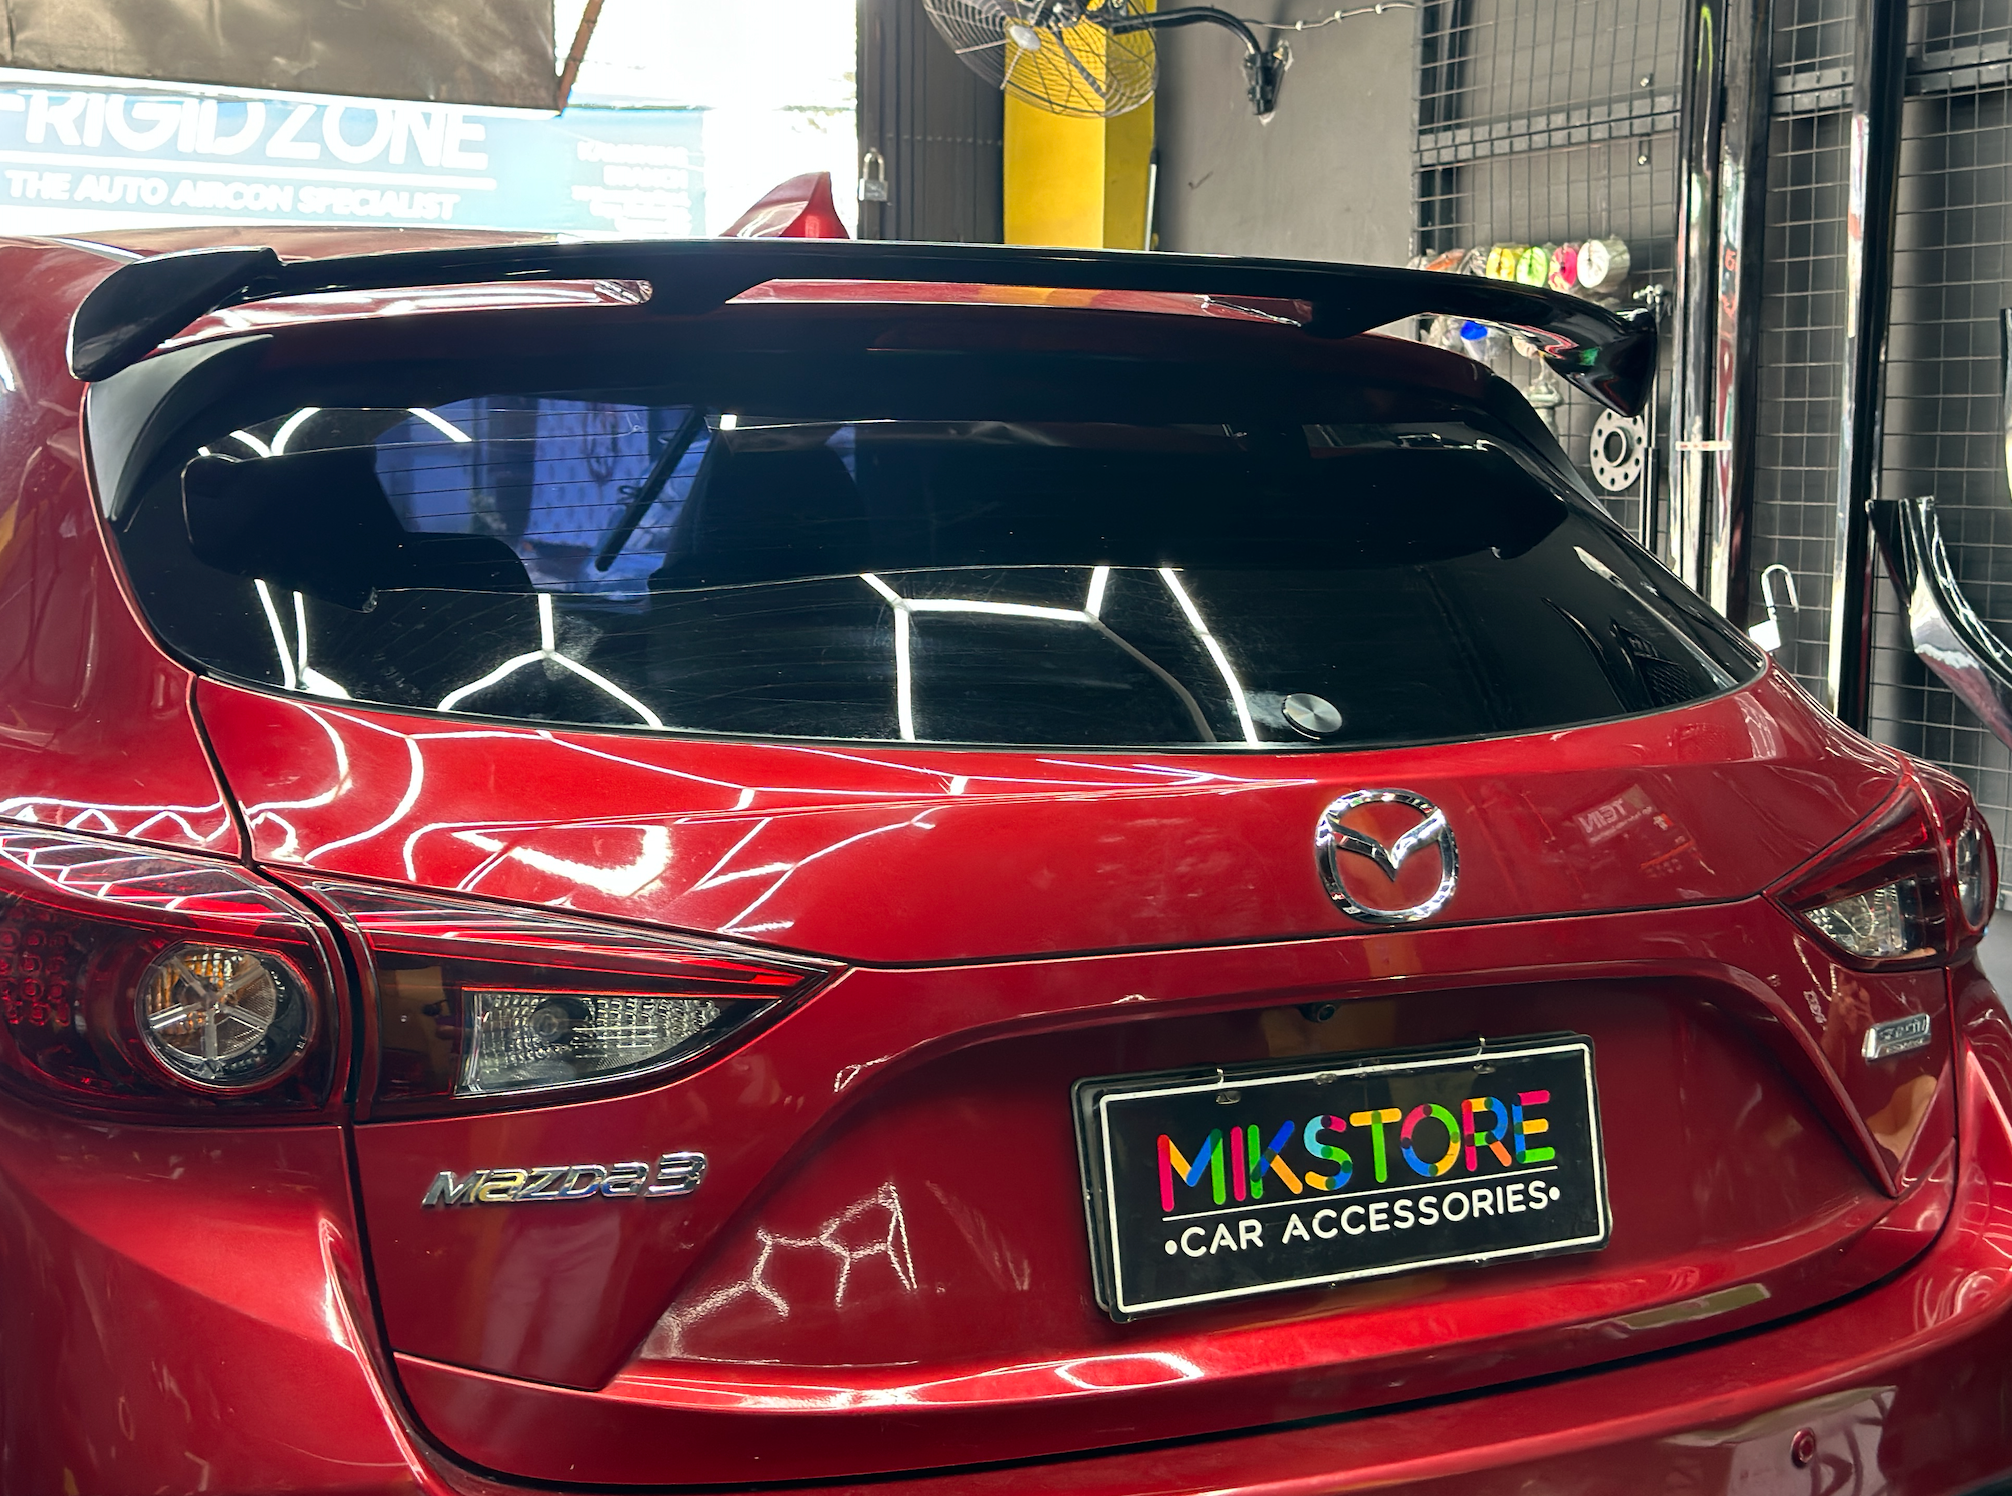 Autoexe Mazda3 BP (2019+) Rear Diffuser